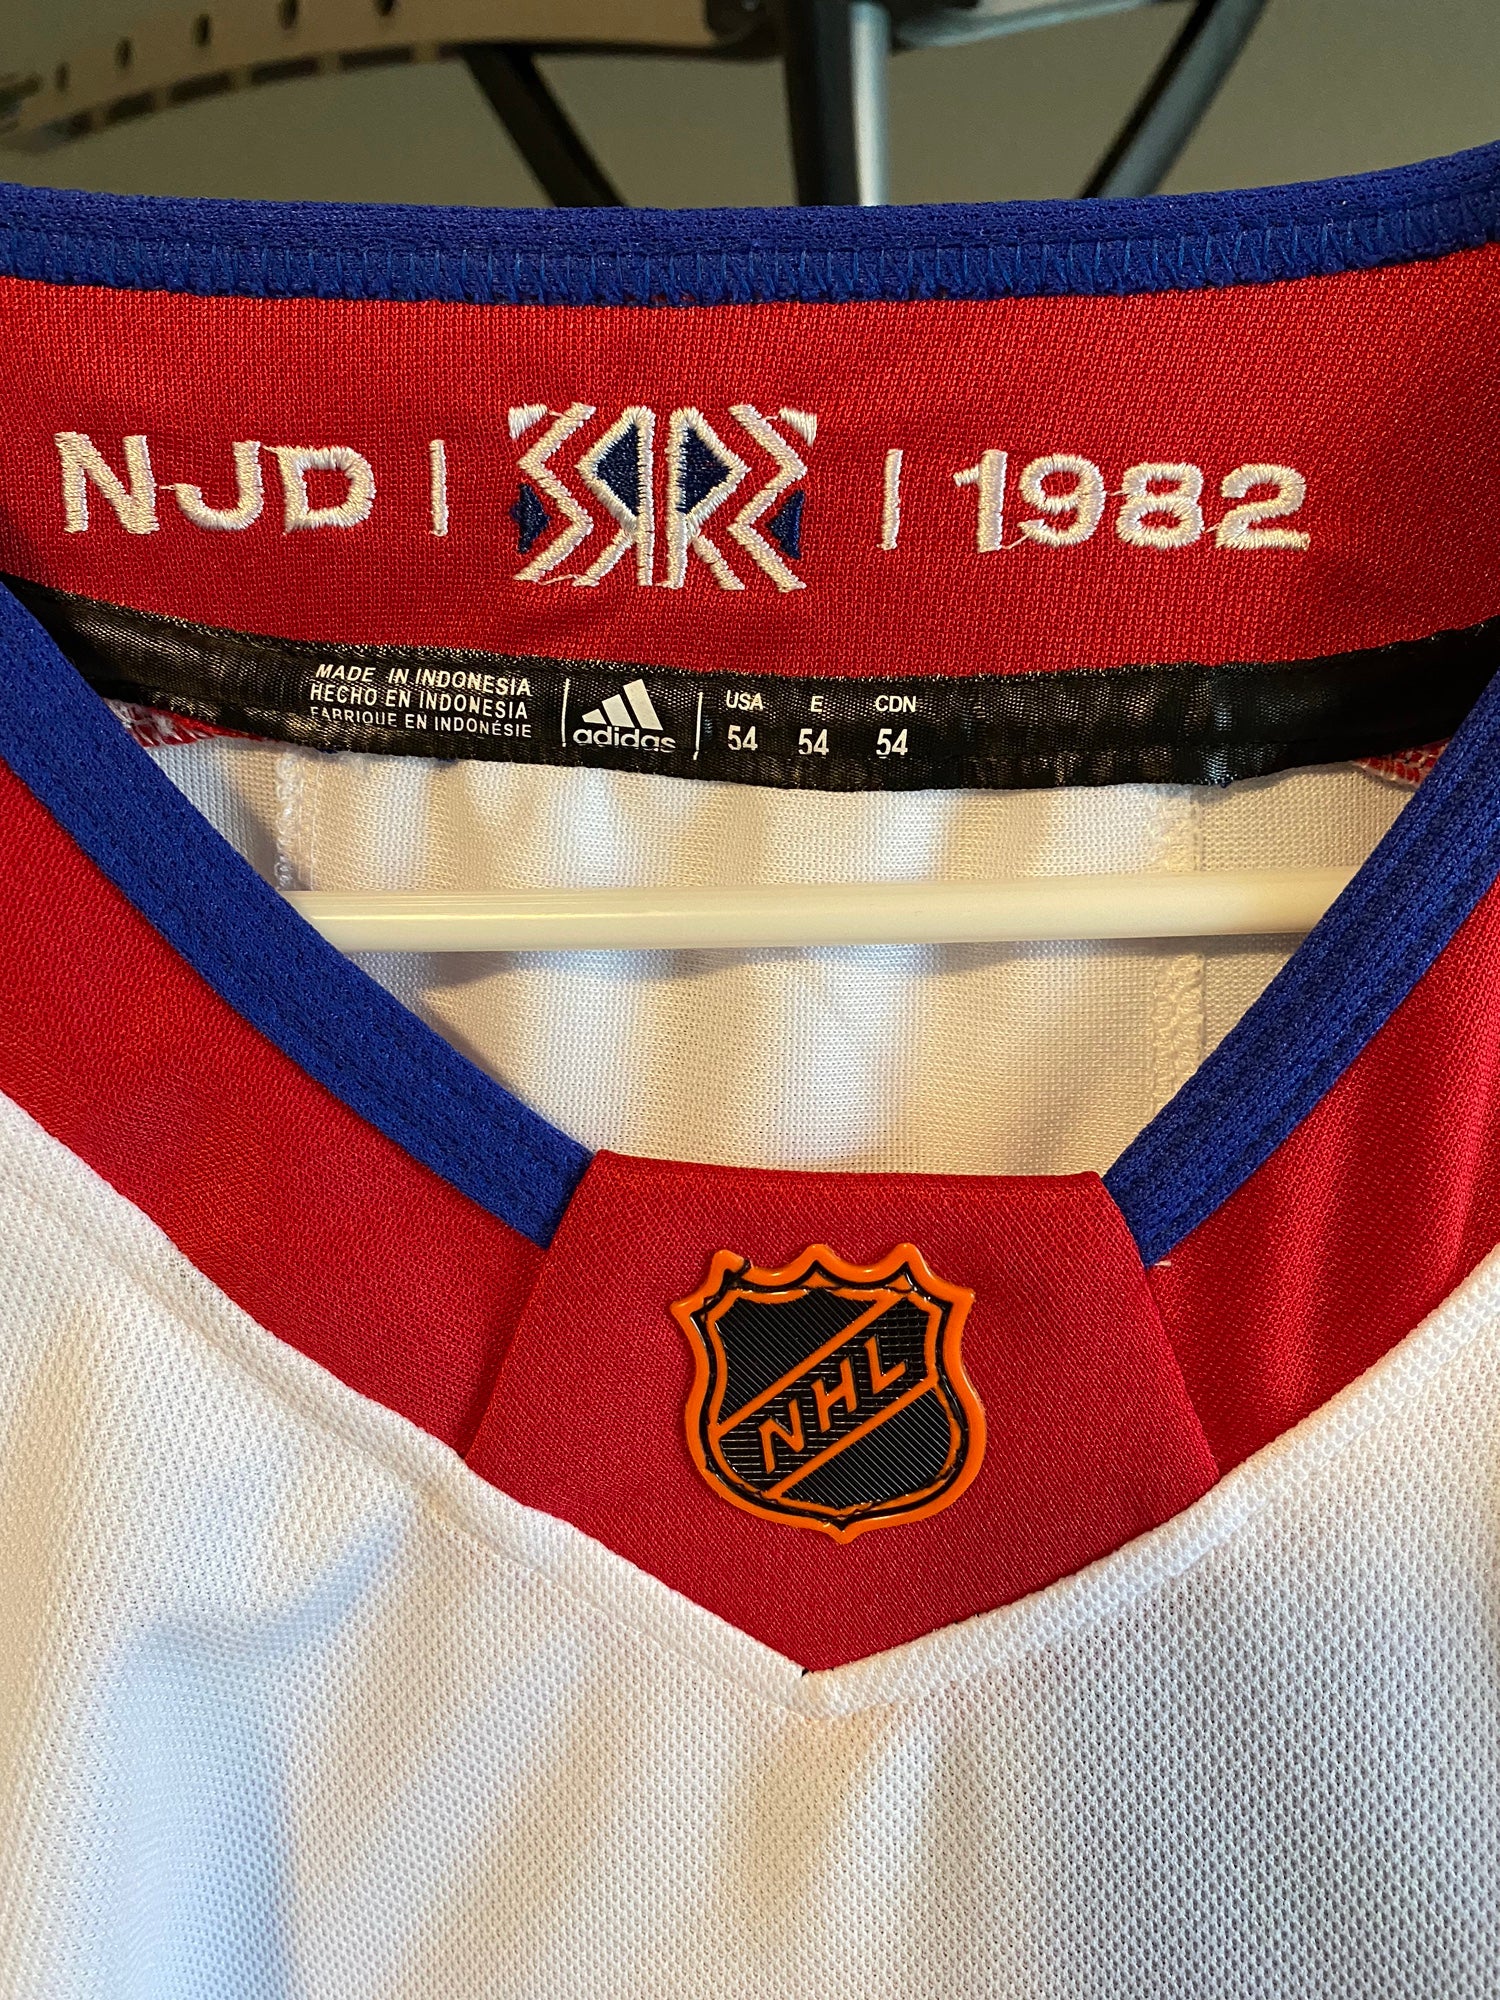 NEW*Jack Hughes Reverse Retro NJ Devils NHL Jersey Size XL 54